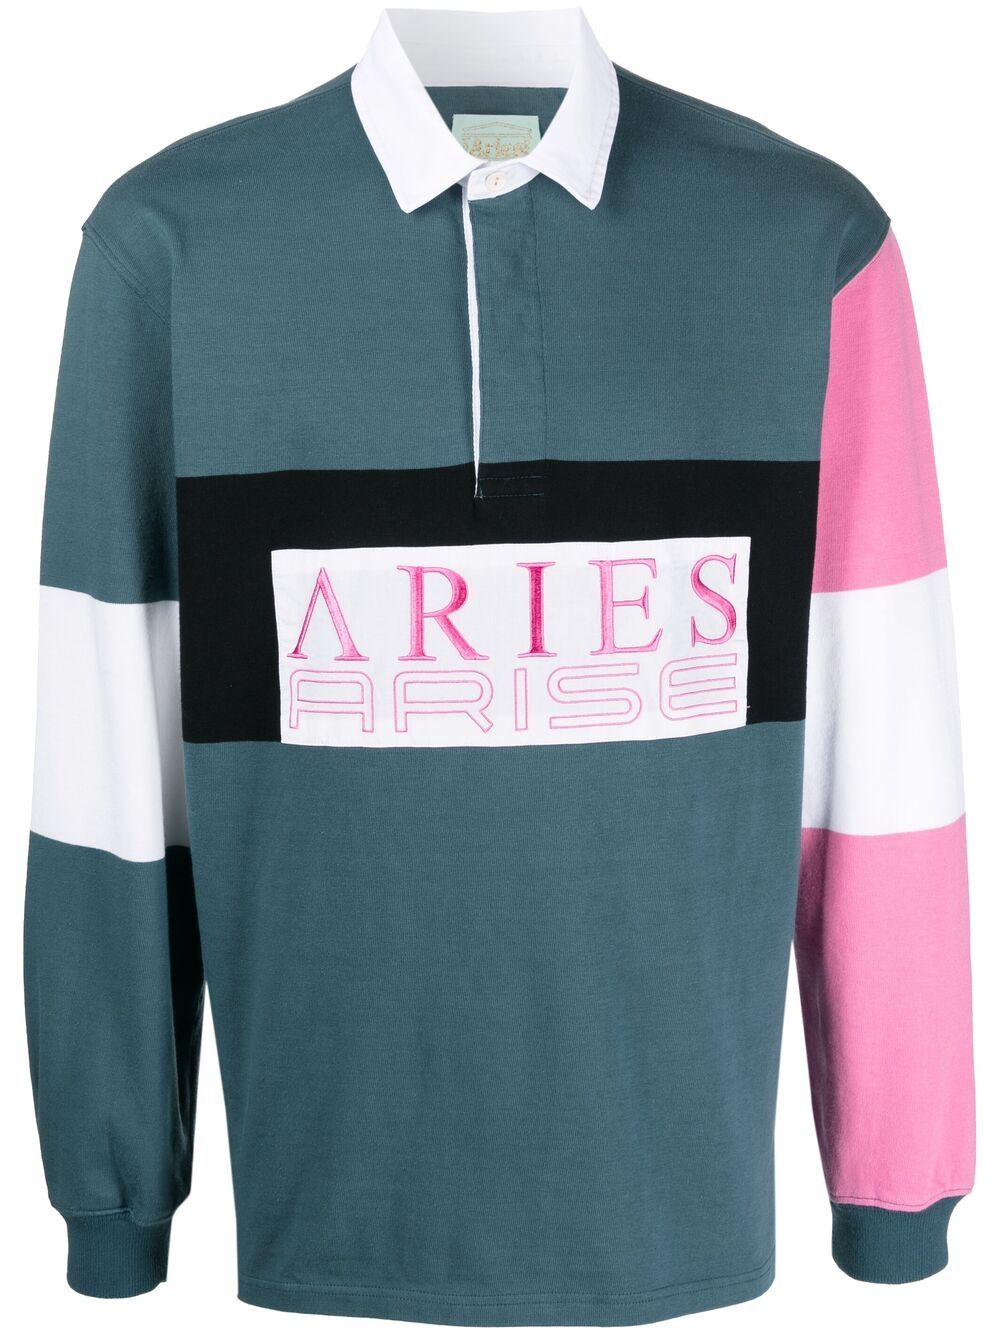 фото Aries рубашка-регби в стиле колор-блок с вышитым логотипом